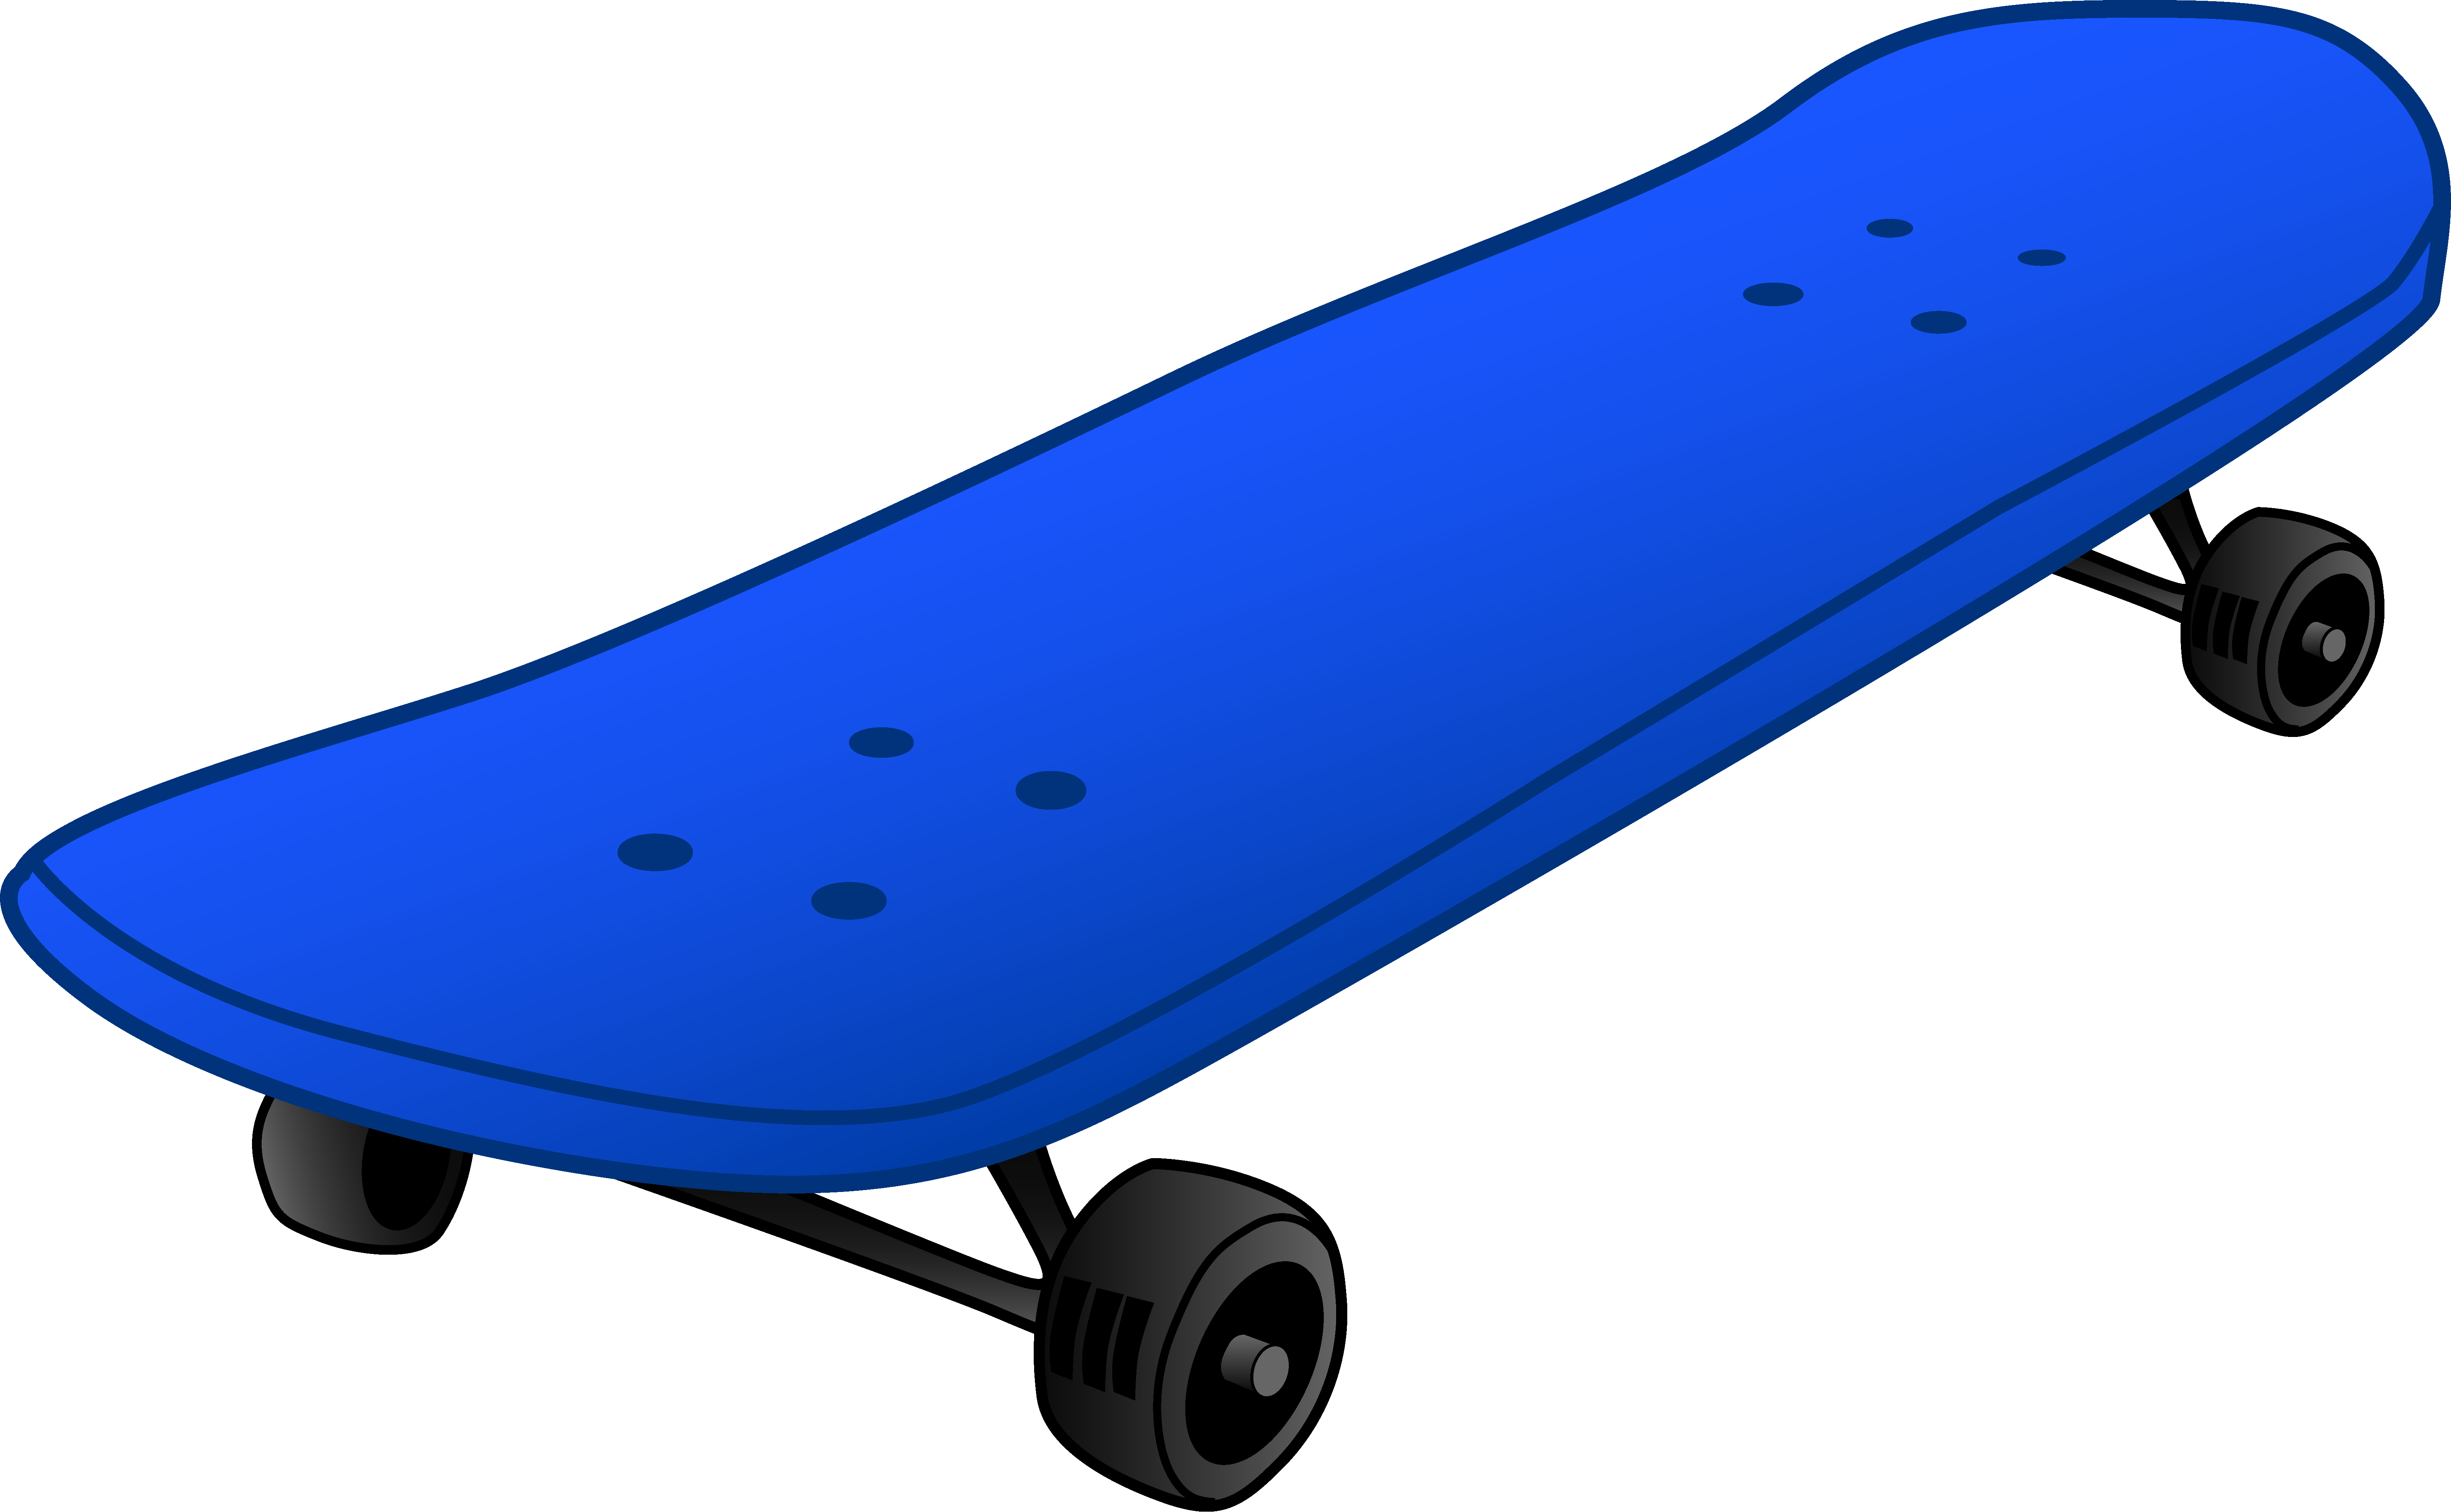 Skateboard Clip Art